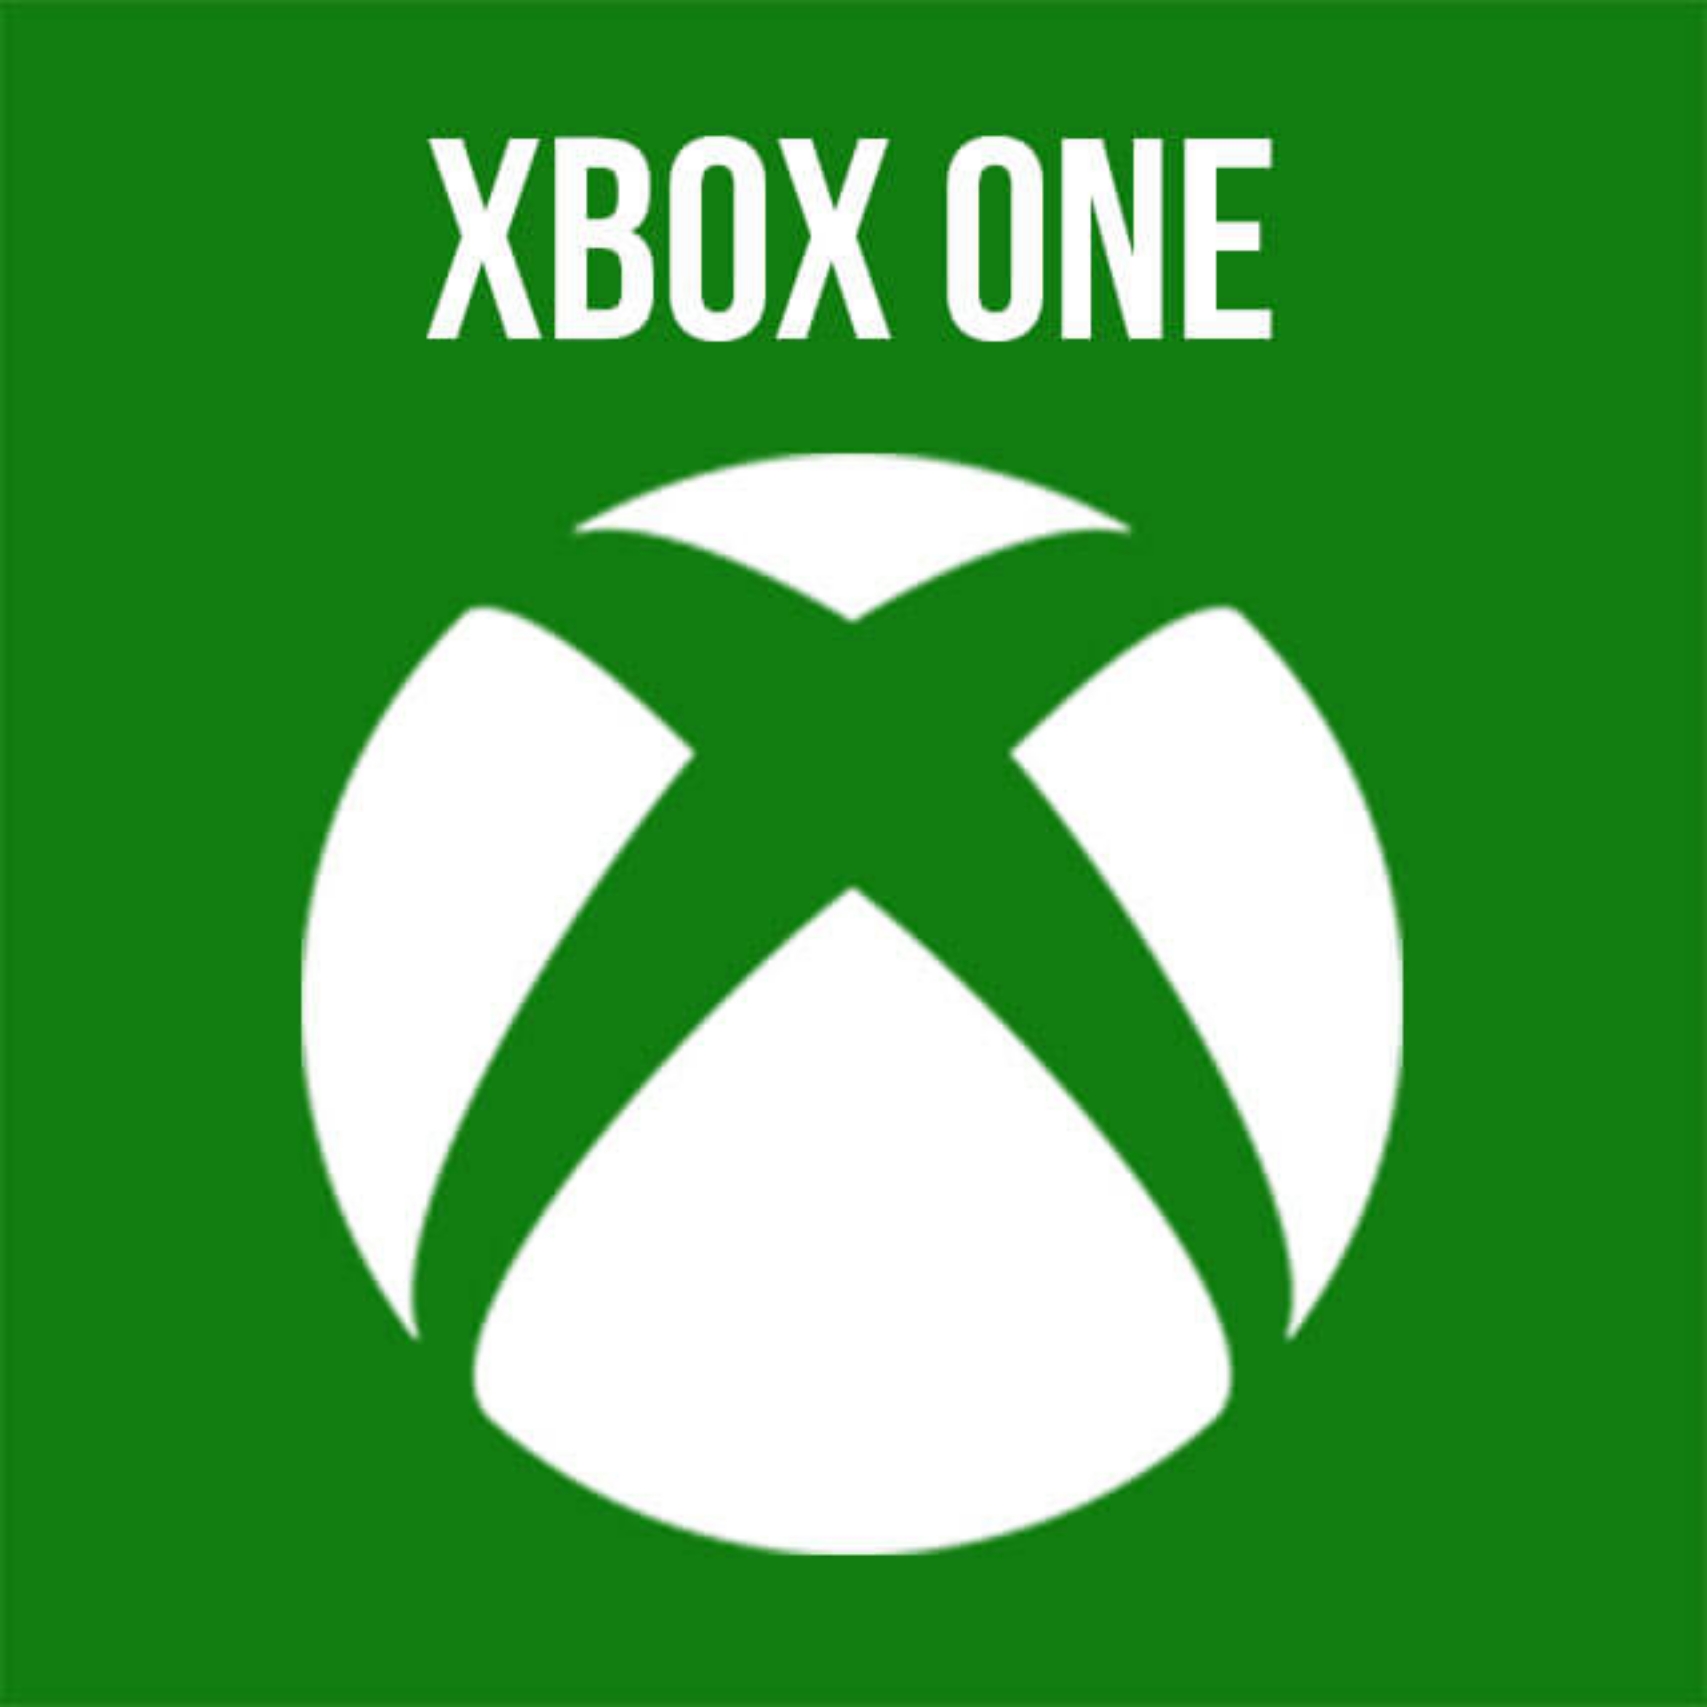 Forza Horizon 4 3 4 7 Modded Accounts Xbox One Games